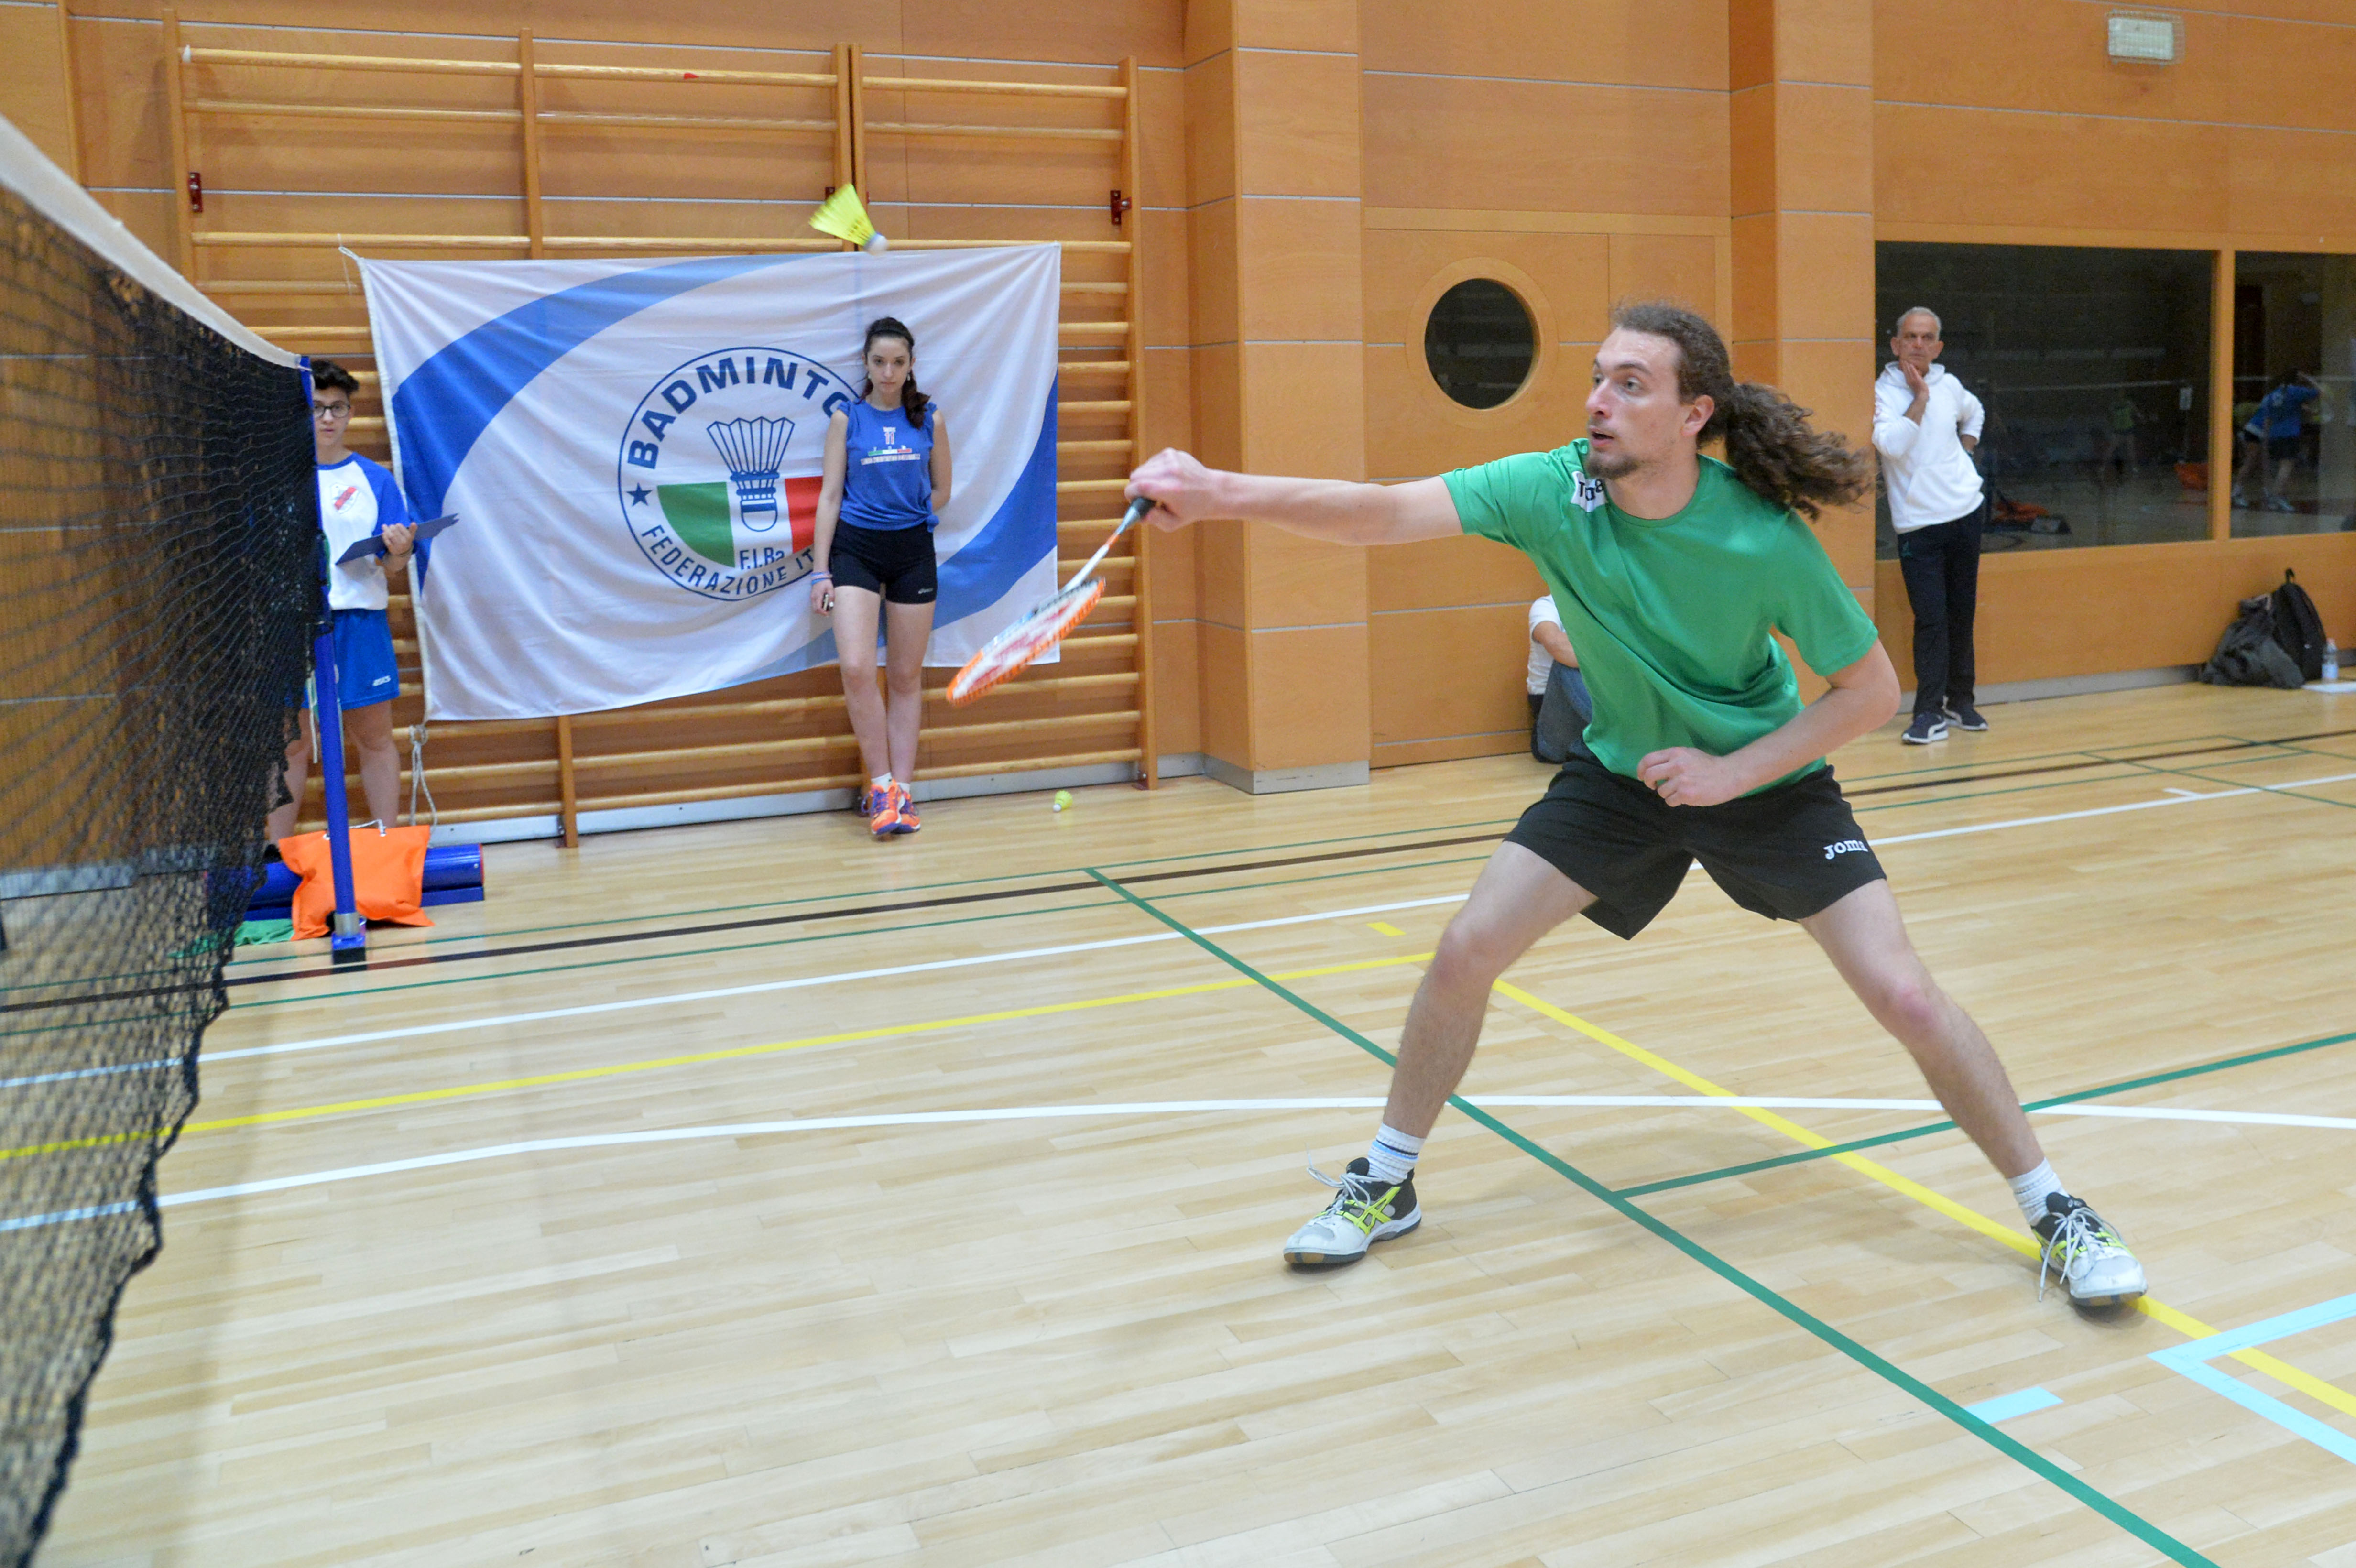 campionati Italiani Badminton e Orientiring foto Daniele Mosna201605306757